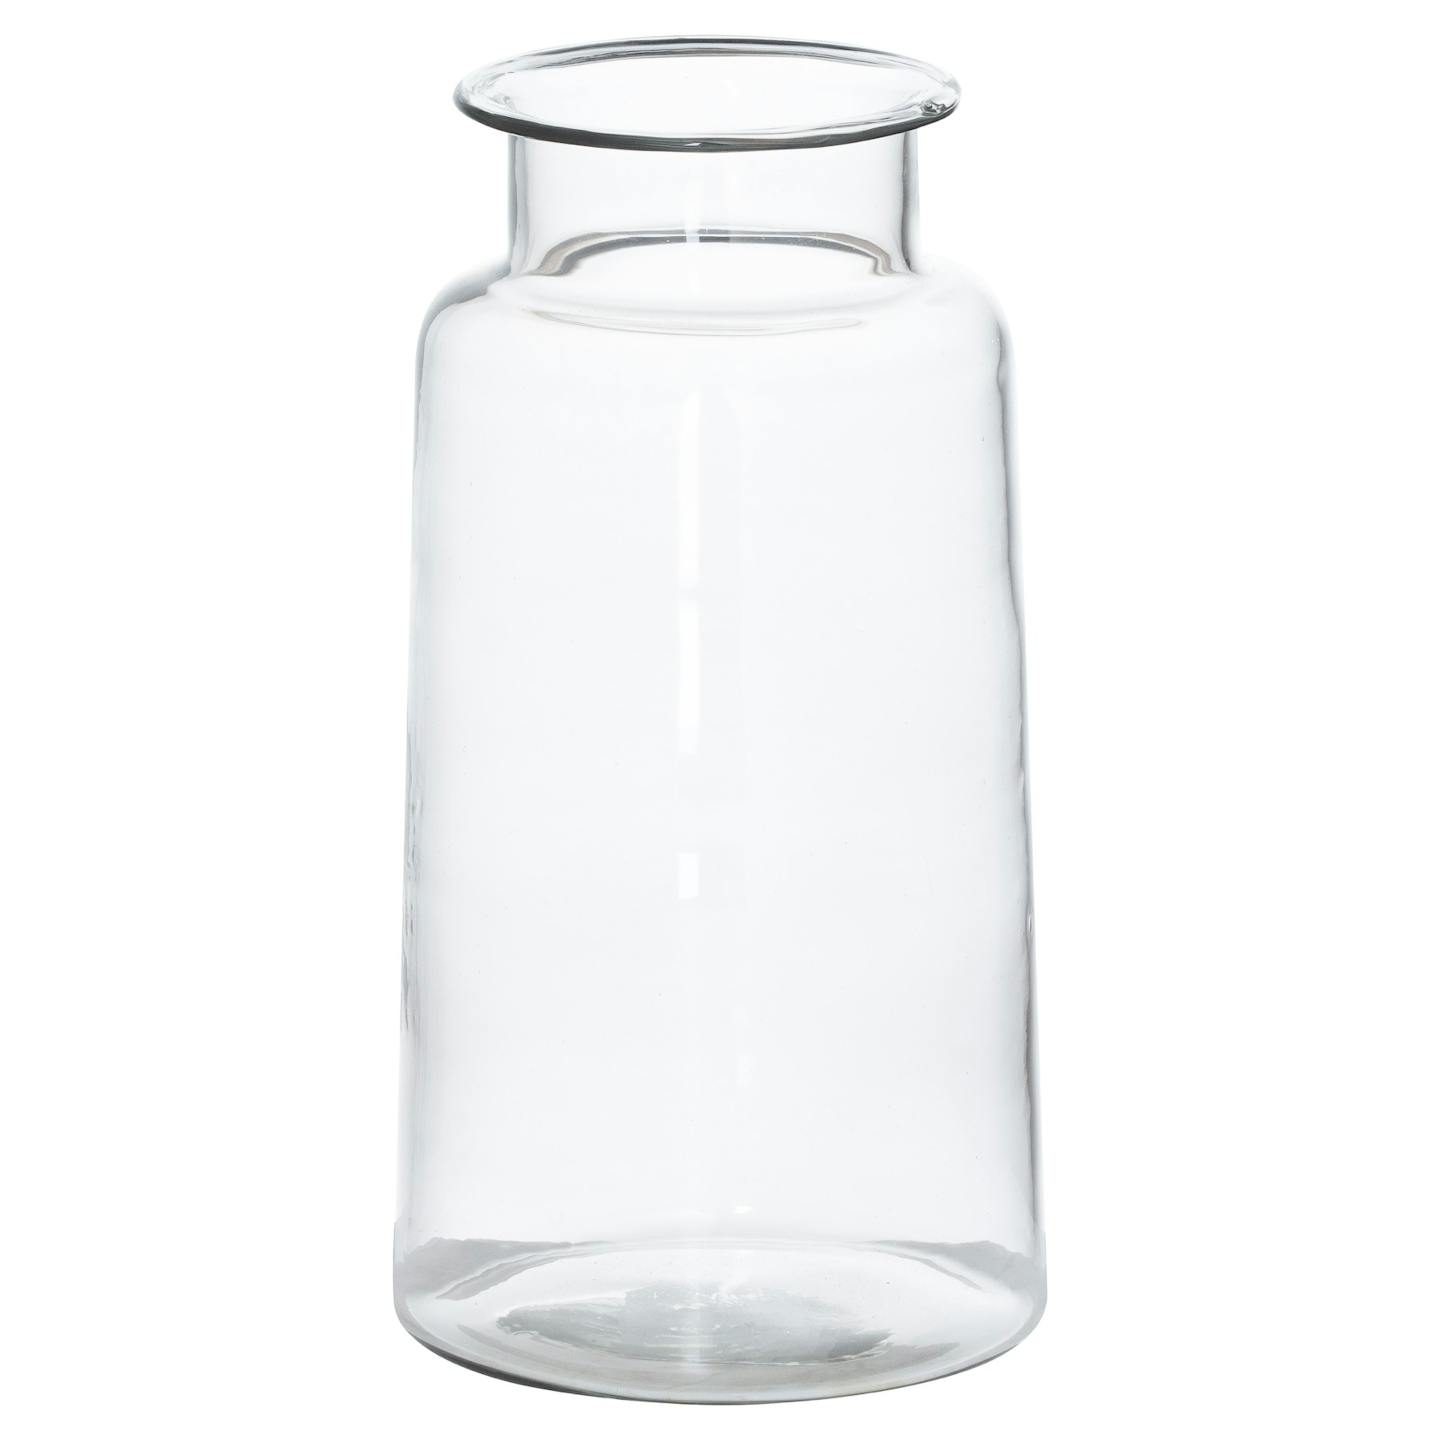 Clear glass urn vase